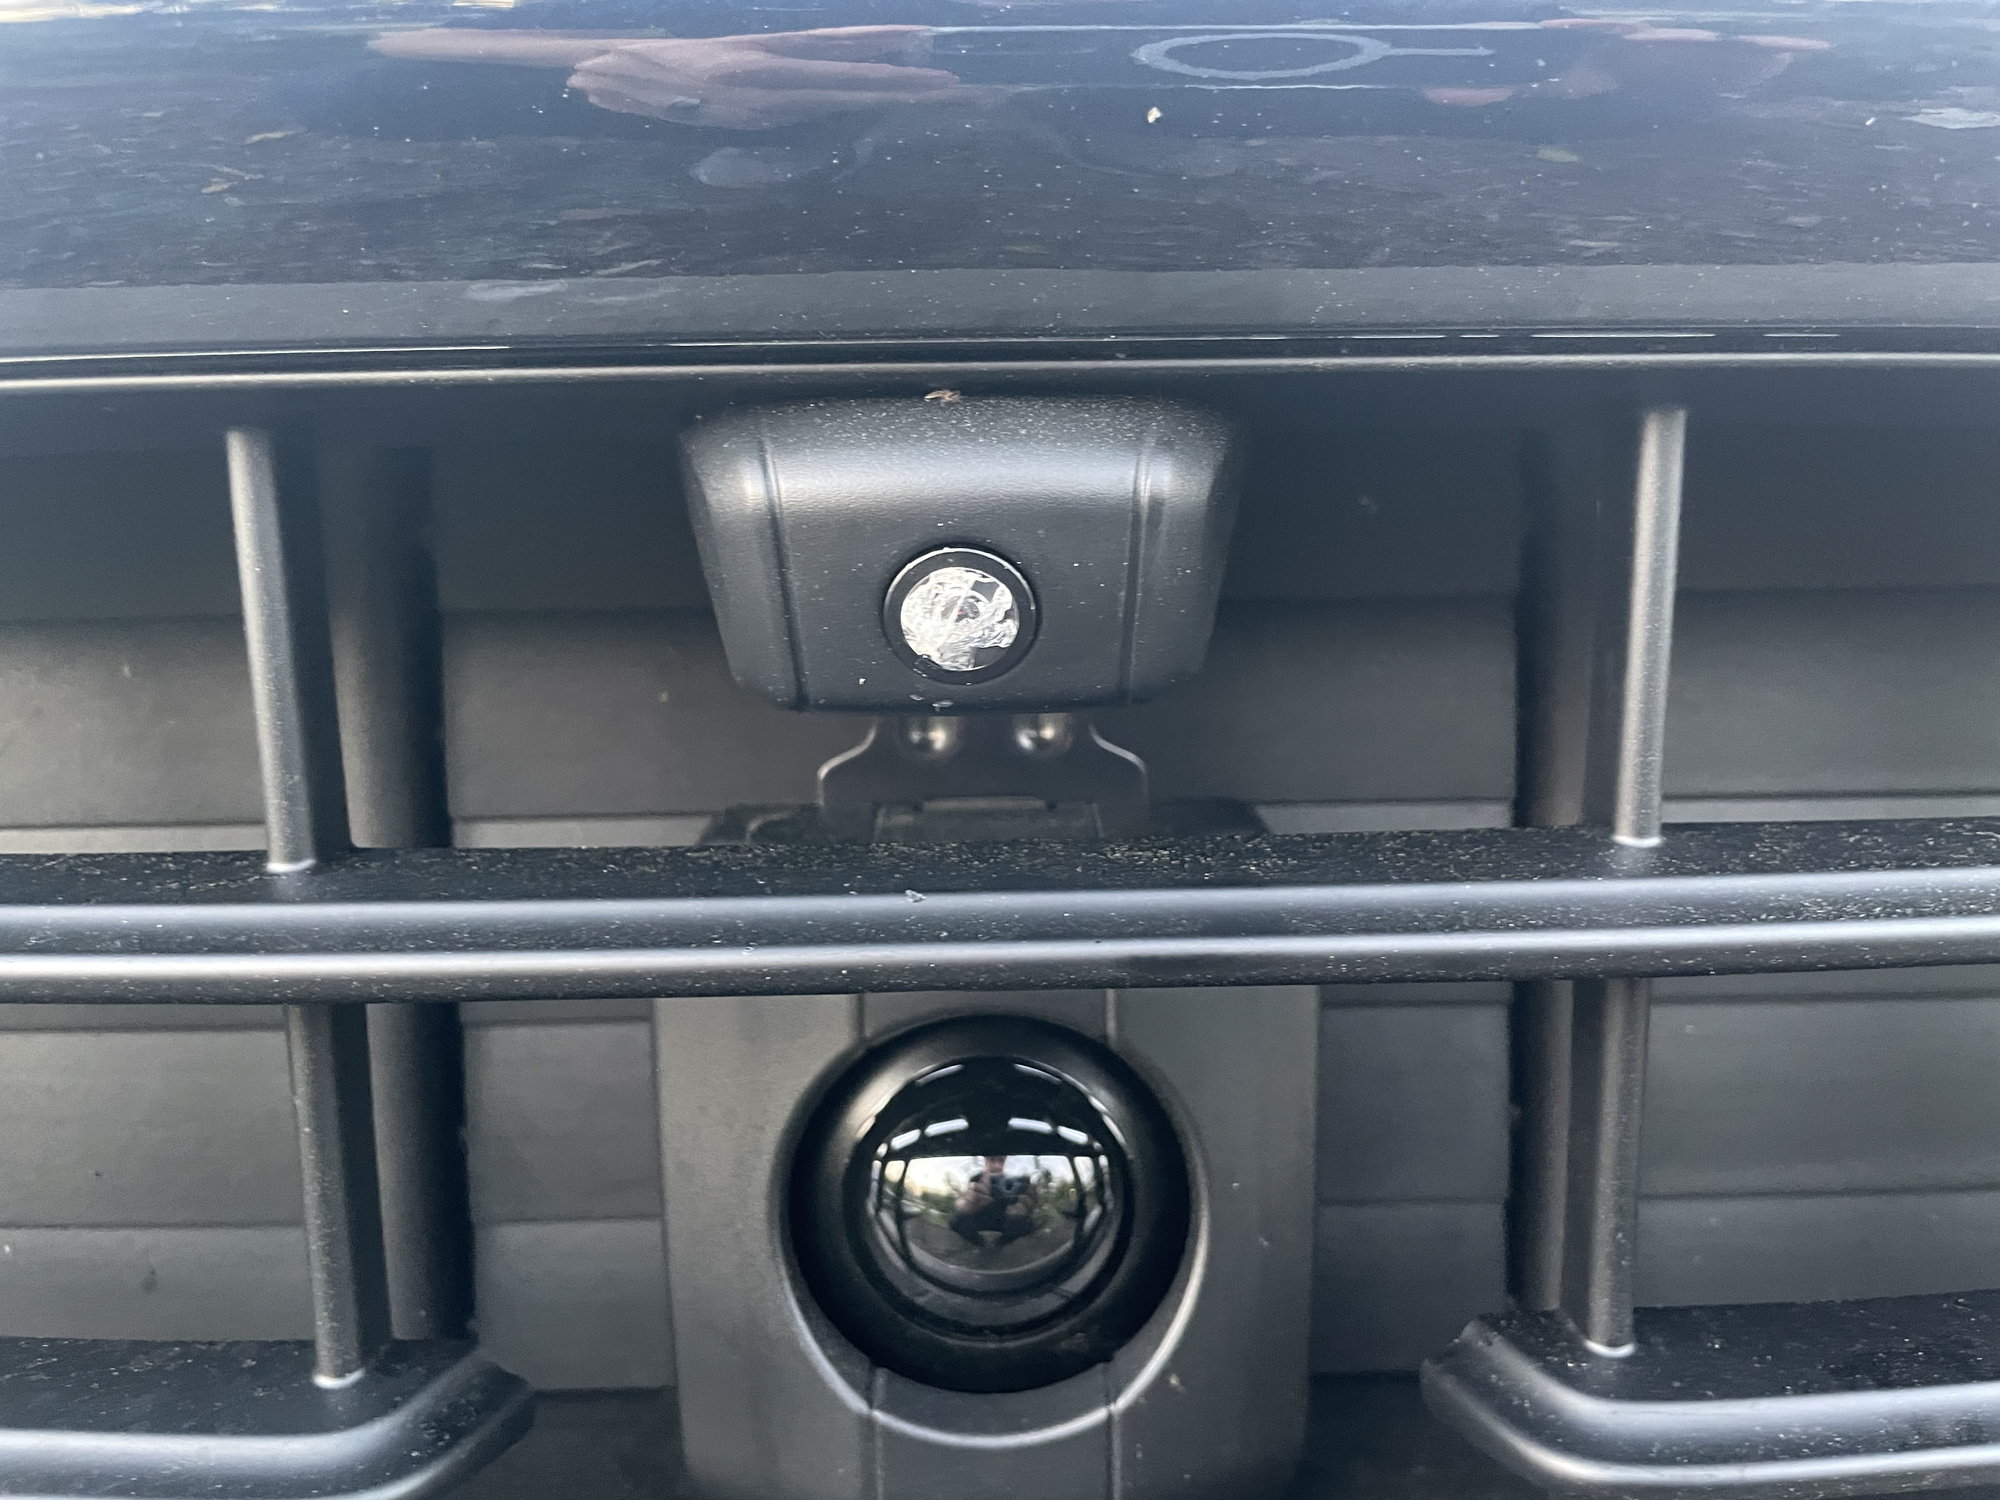 Cracked lens on front camera…common? - Rennlist - Porsche